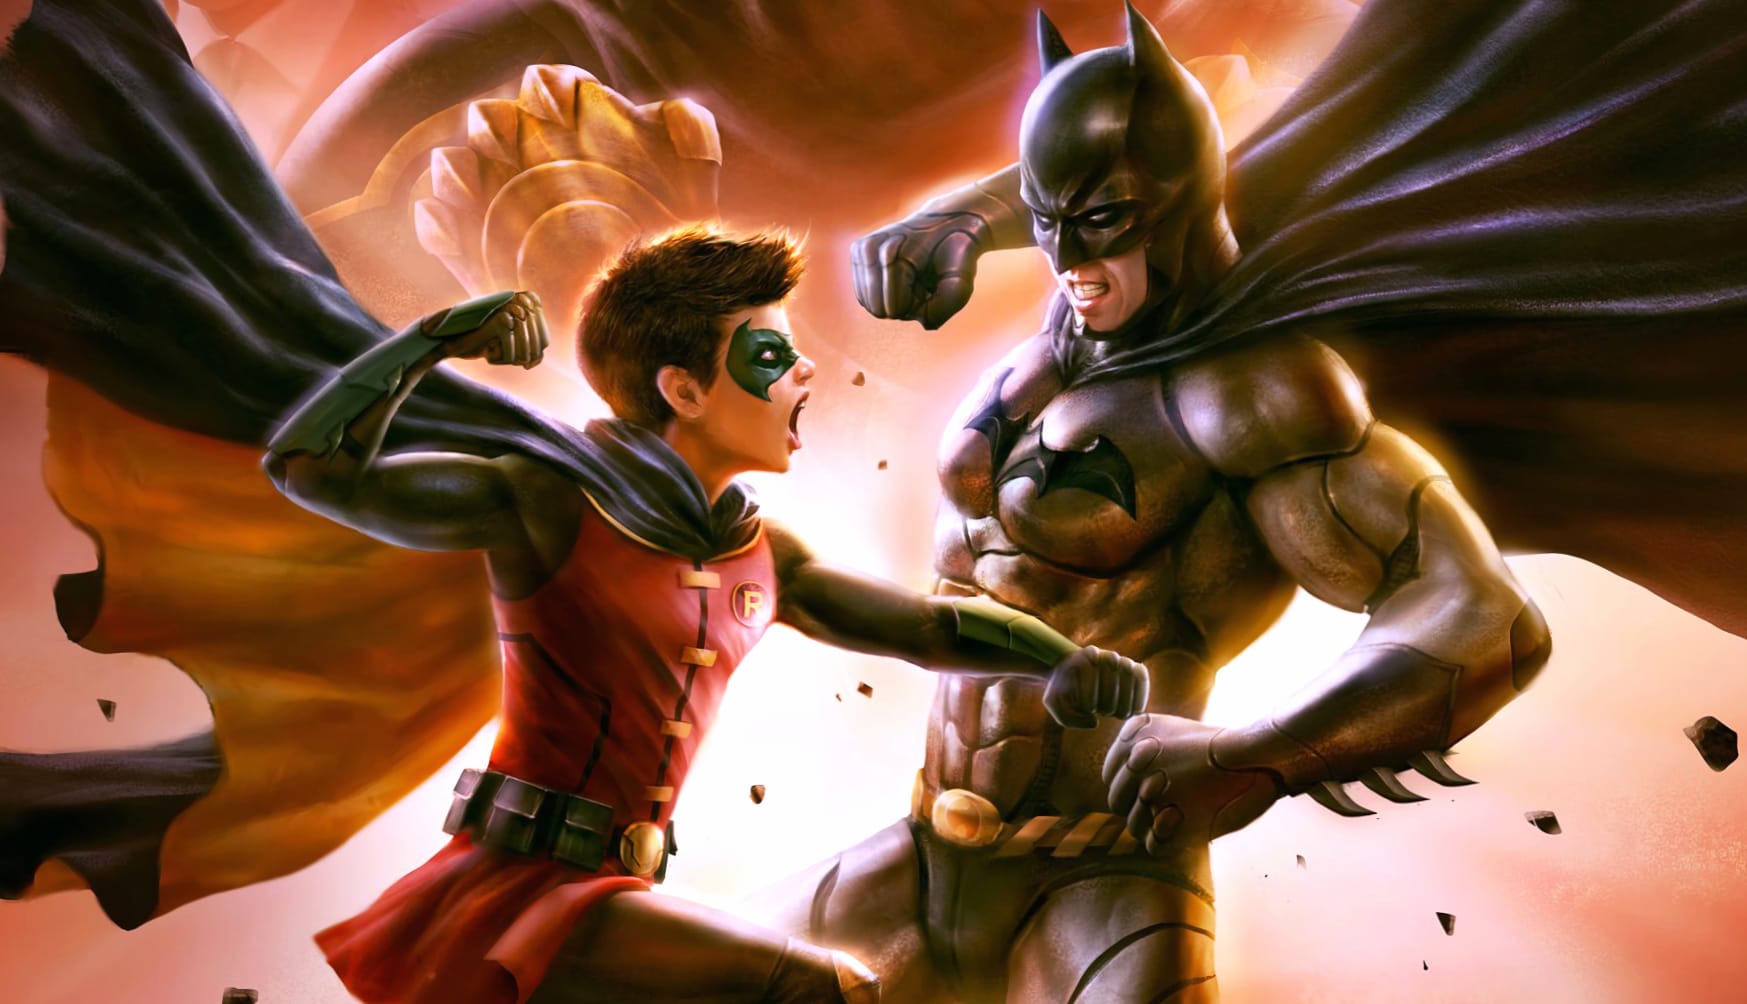 Batman vs. Robin at 1600 x 1200 size wallpapers HD quality